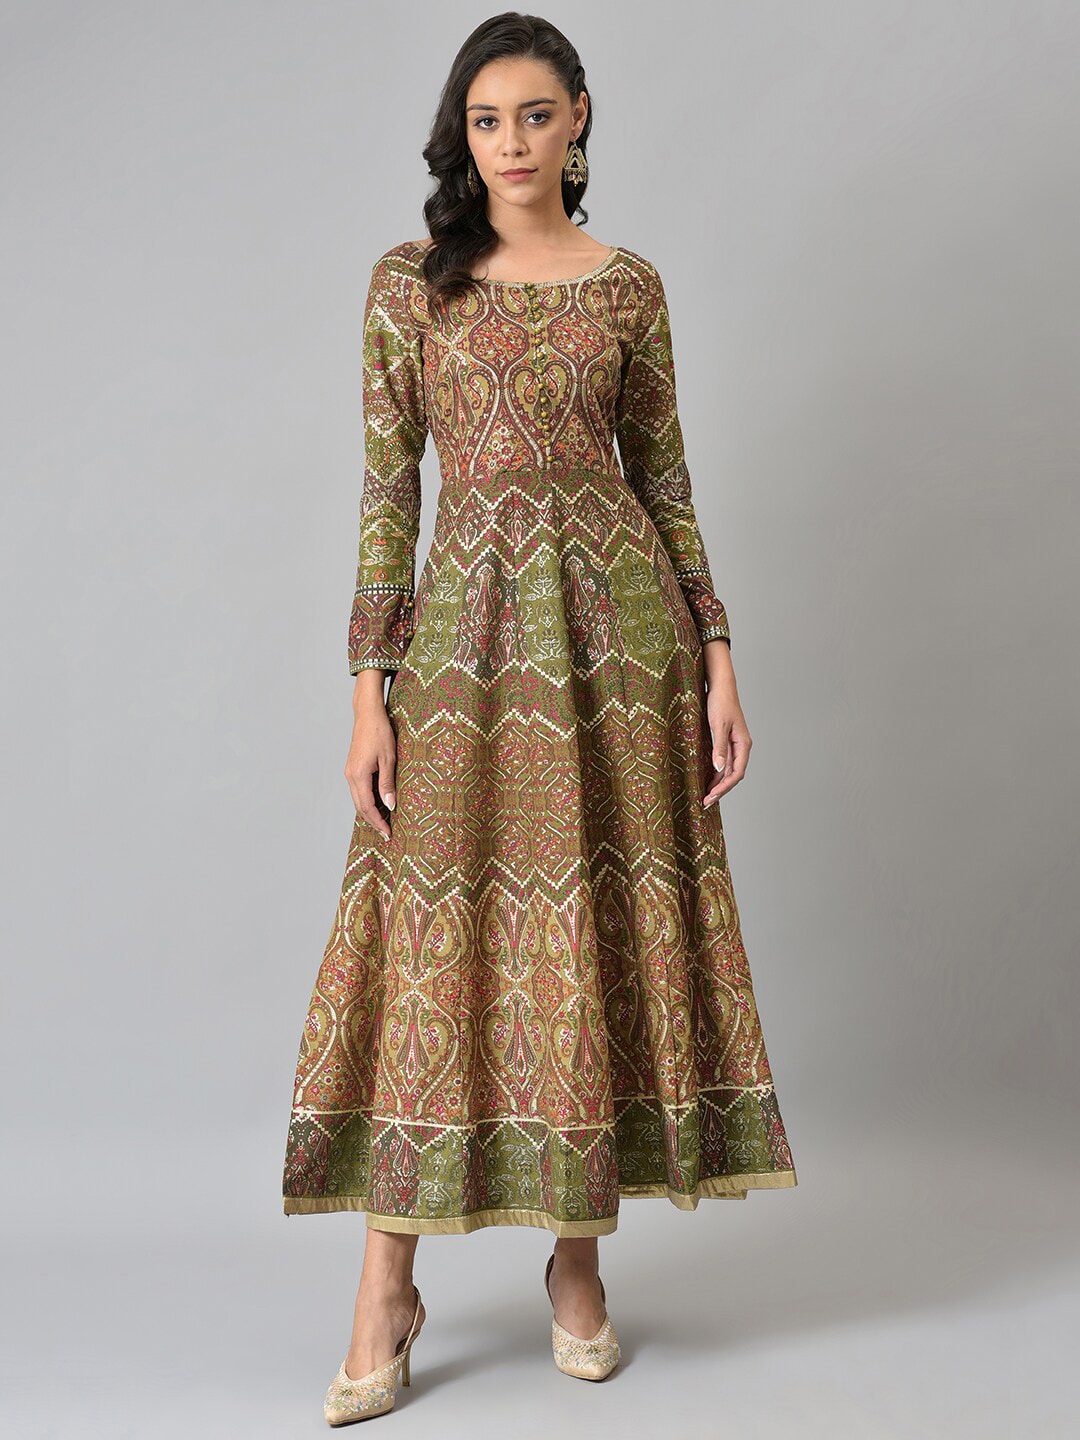 W Red & Green Ethnic Motifs Chiffon Ethnic Maxi Dress Price in India